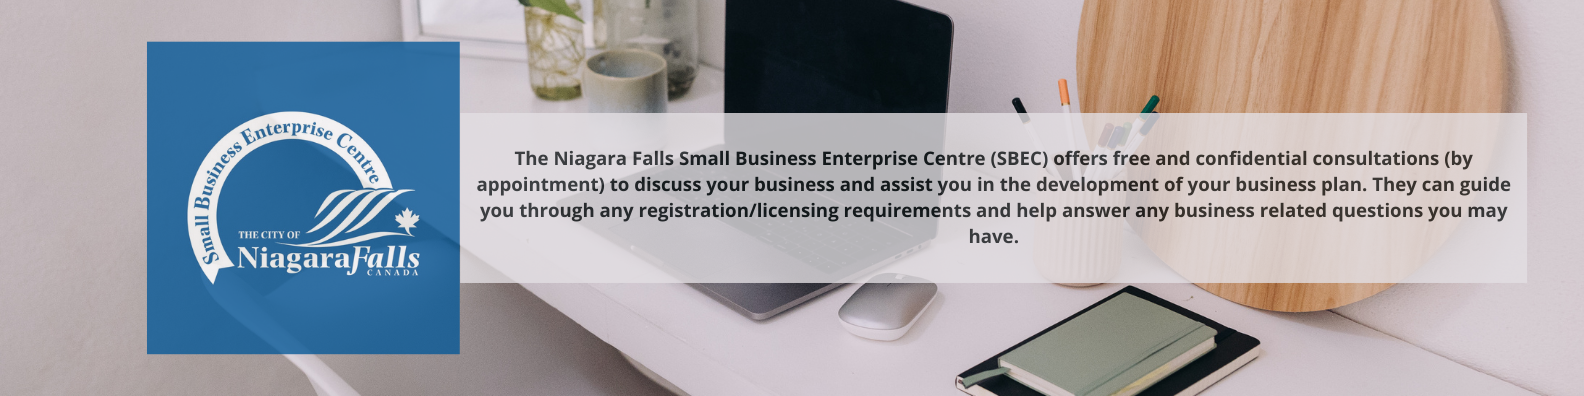 small business enterprise centre